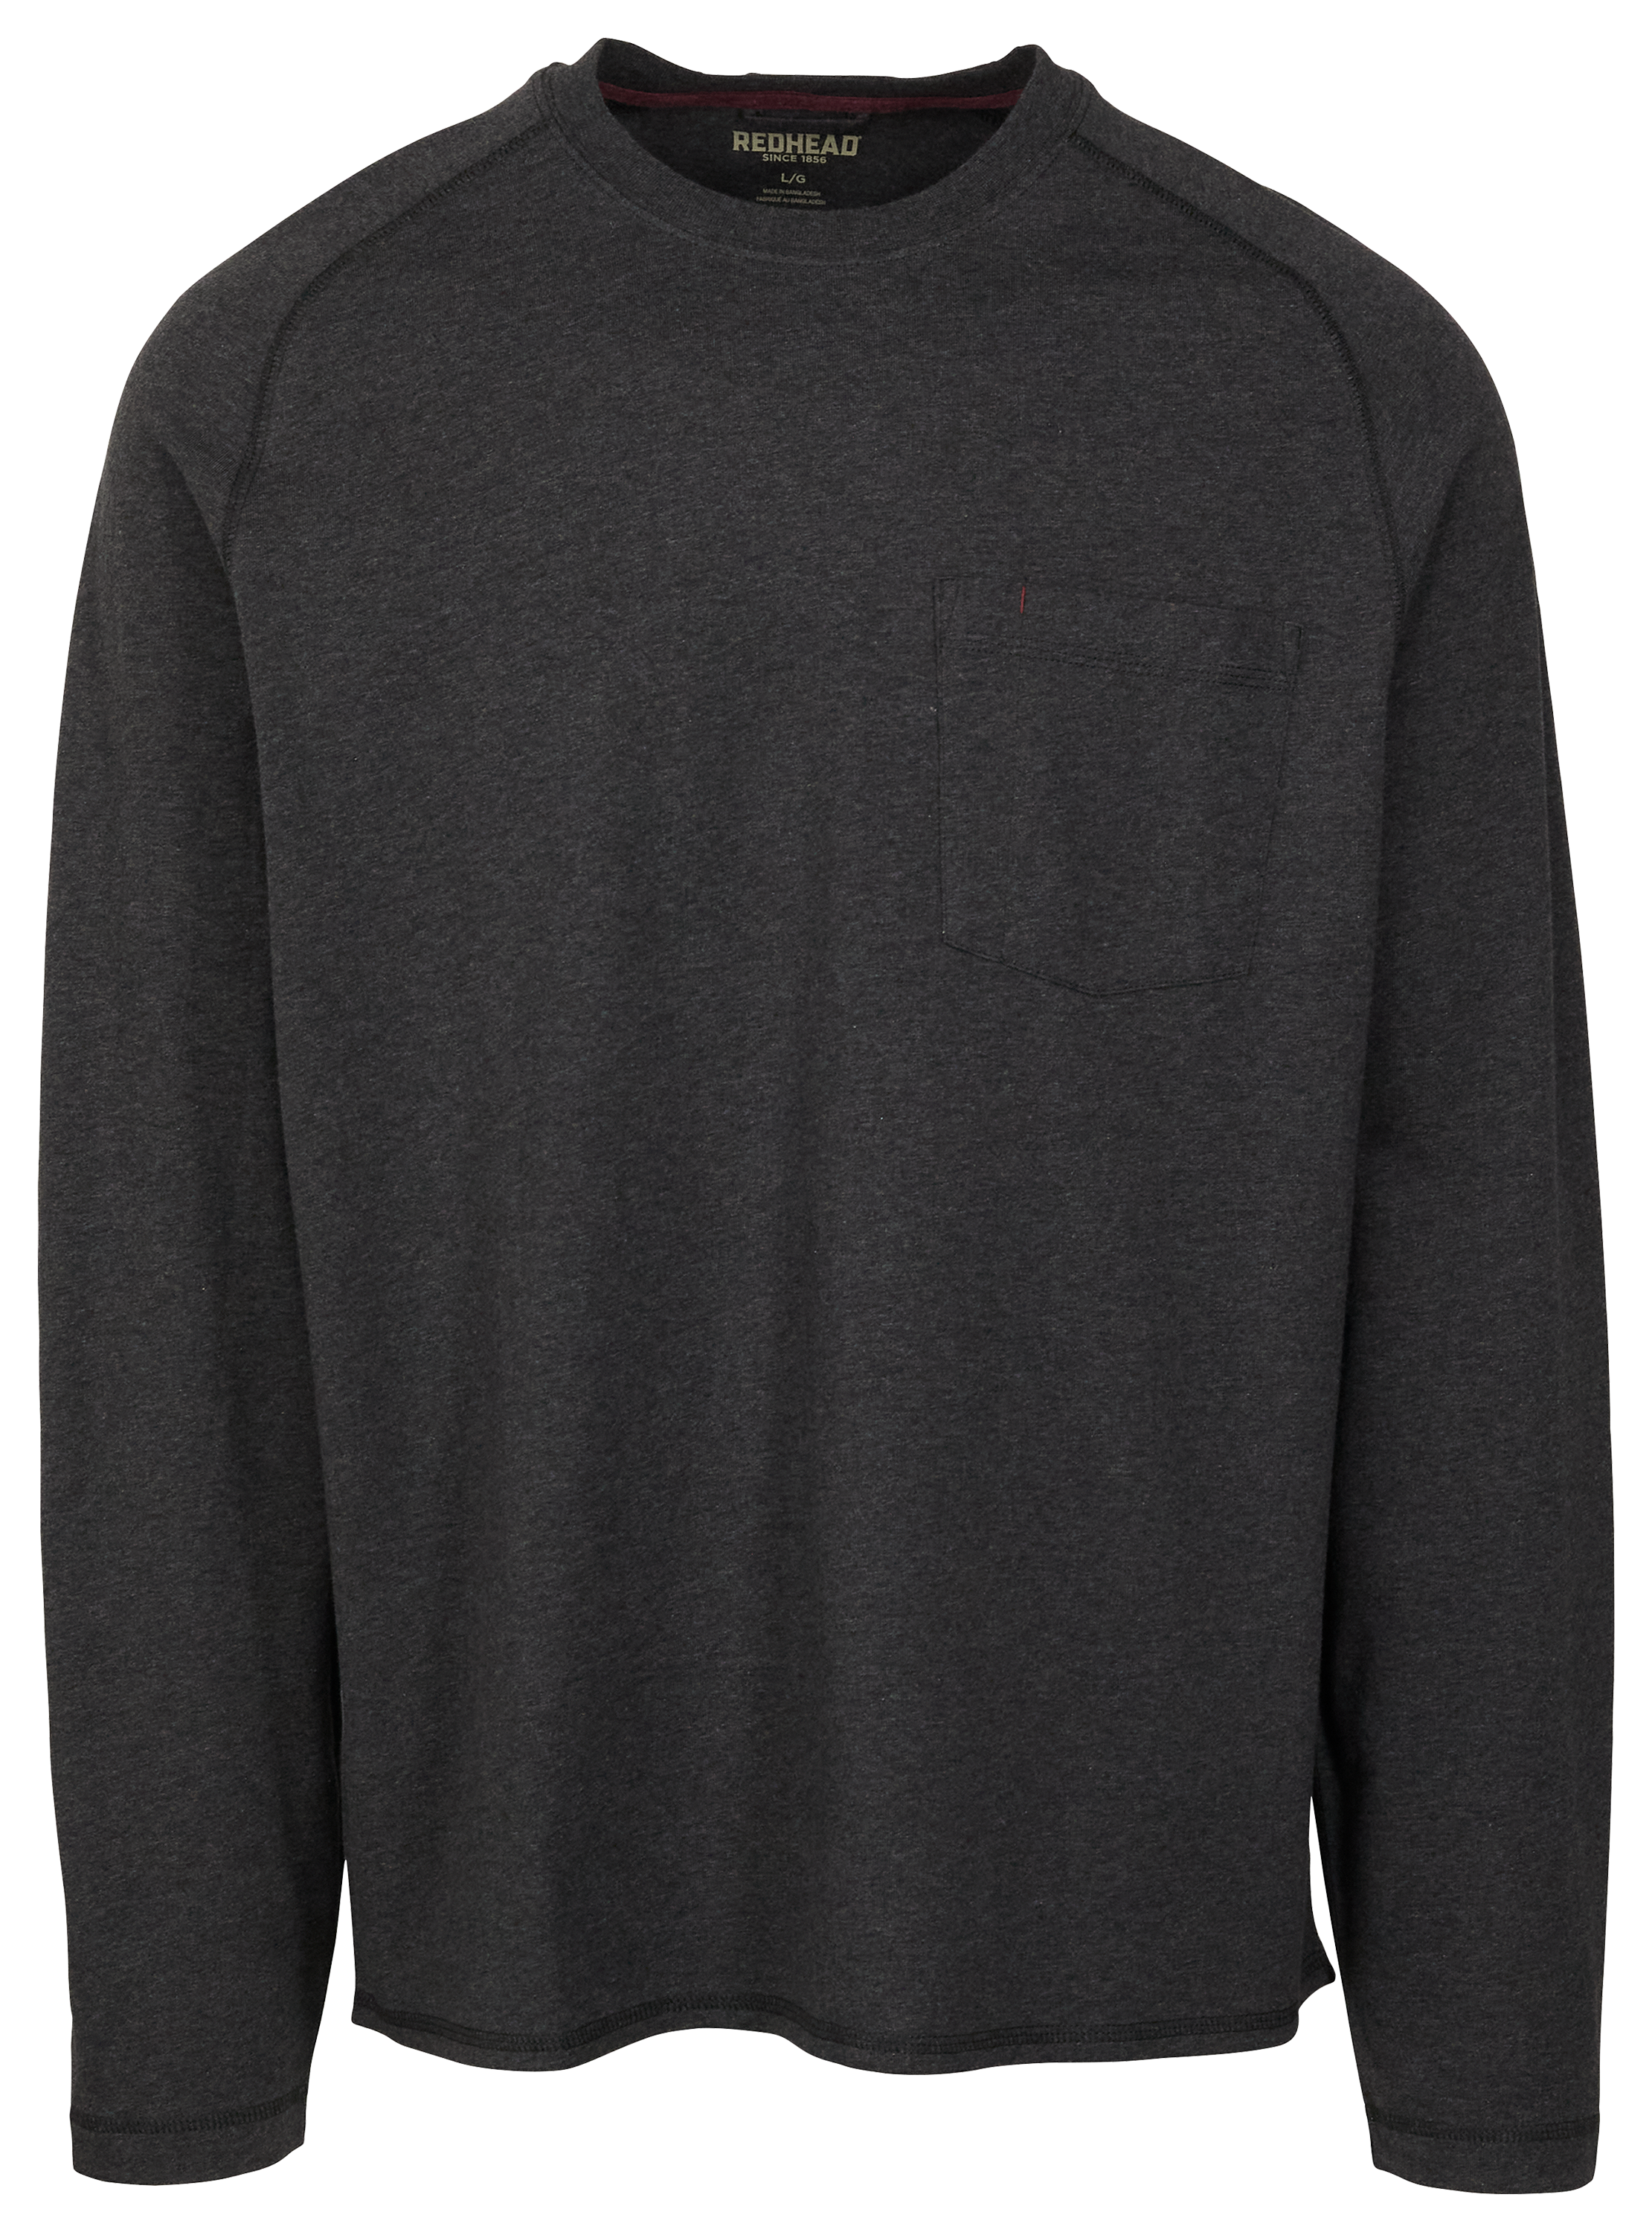 RedHead Pro Series Pocket Tech Long-Sleeve Shirt for Men